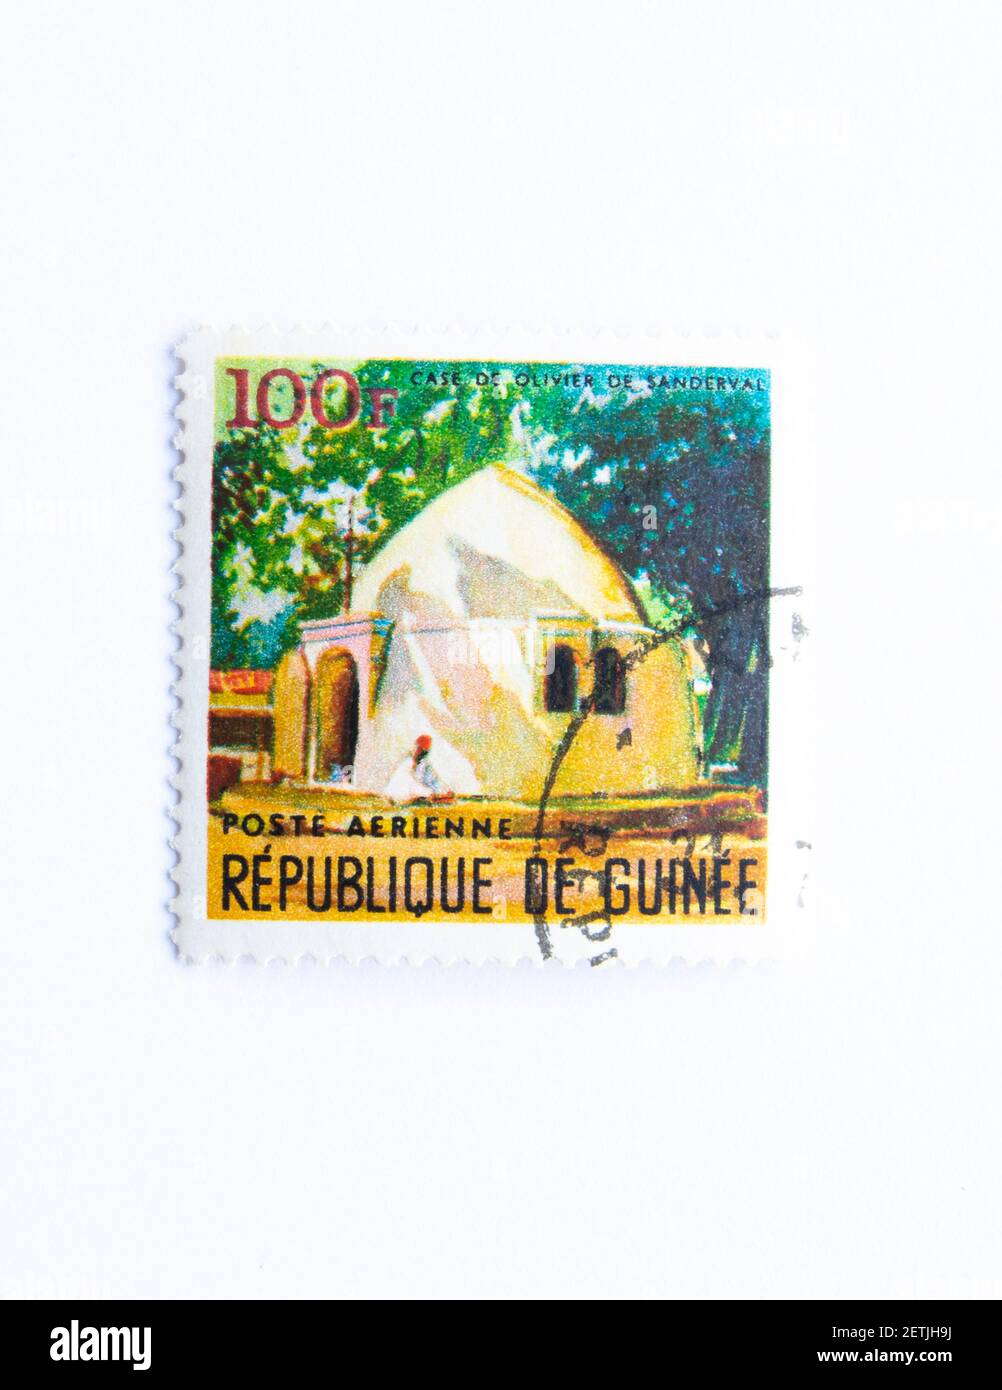 01.03.2021 Istanbul Turkey. Guinea Republic Postage Stamp. circa 1967. House of Oliviar Sanderval Stock Photo